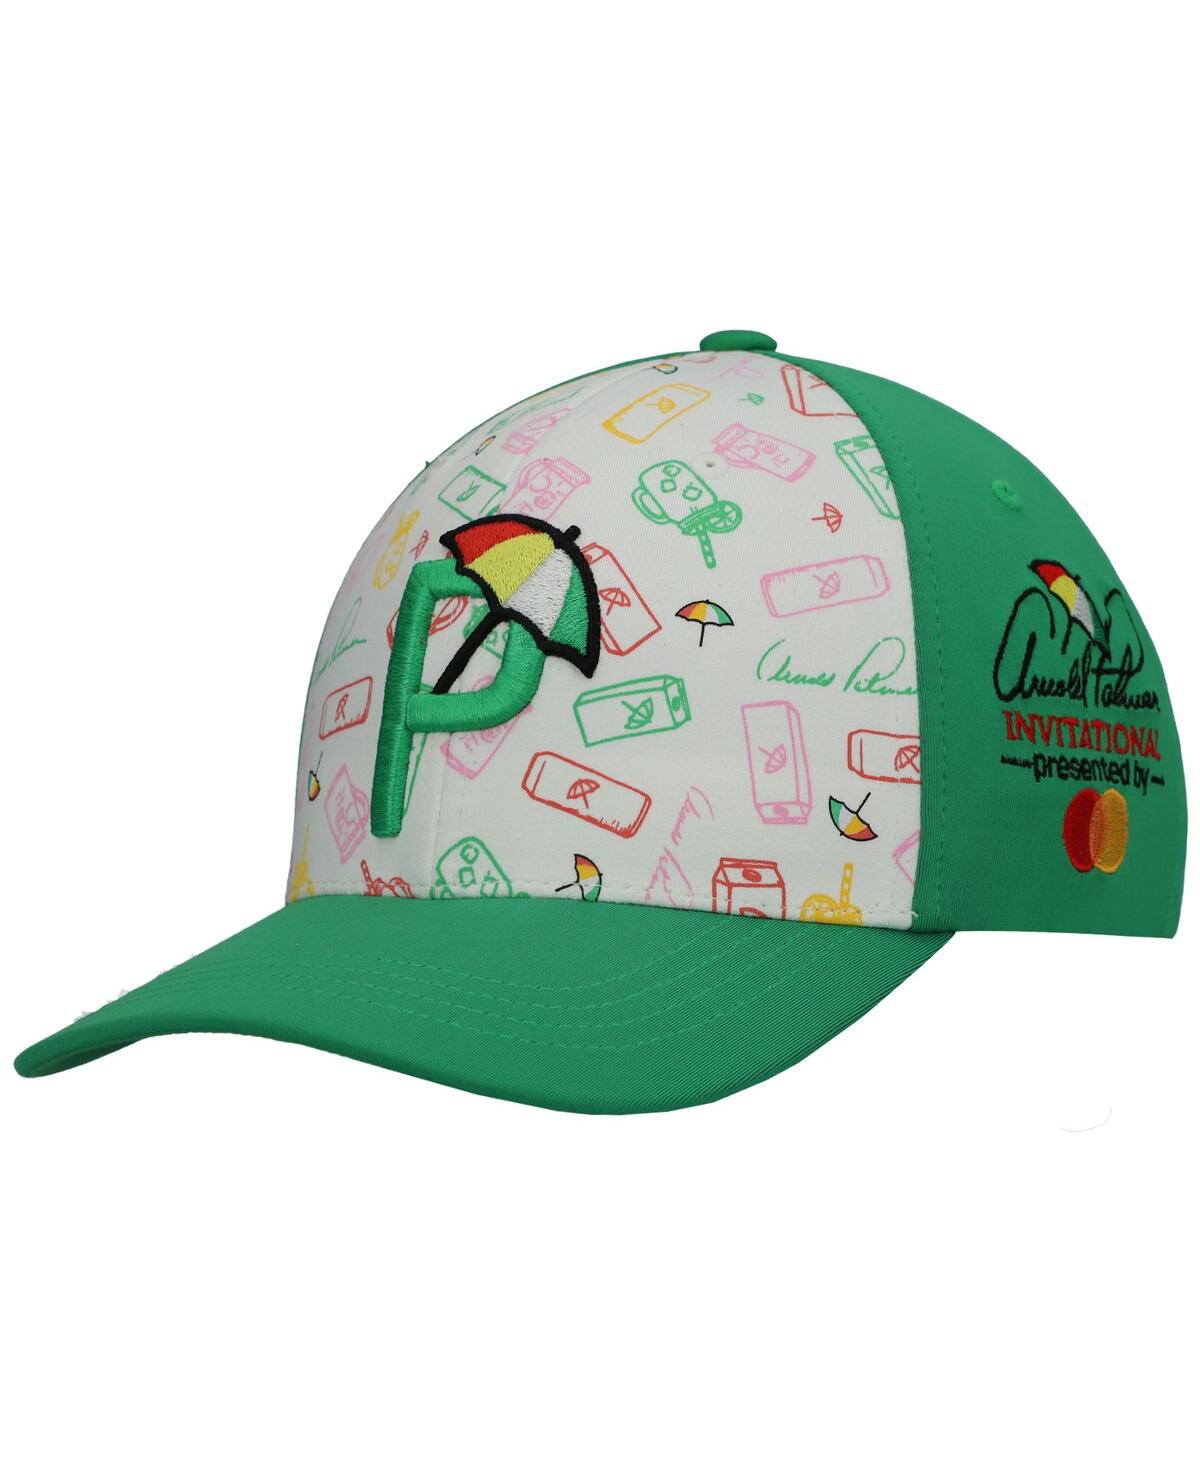 Men's Puma Green Arnold Palmer Invitational Snapback Hat - Green